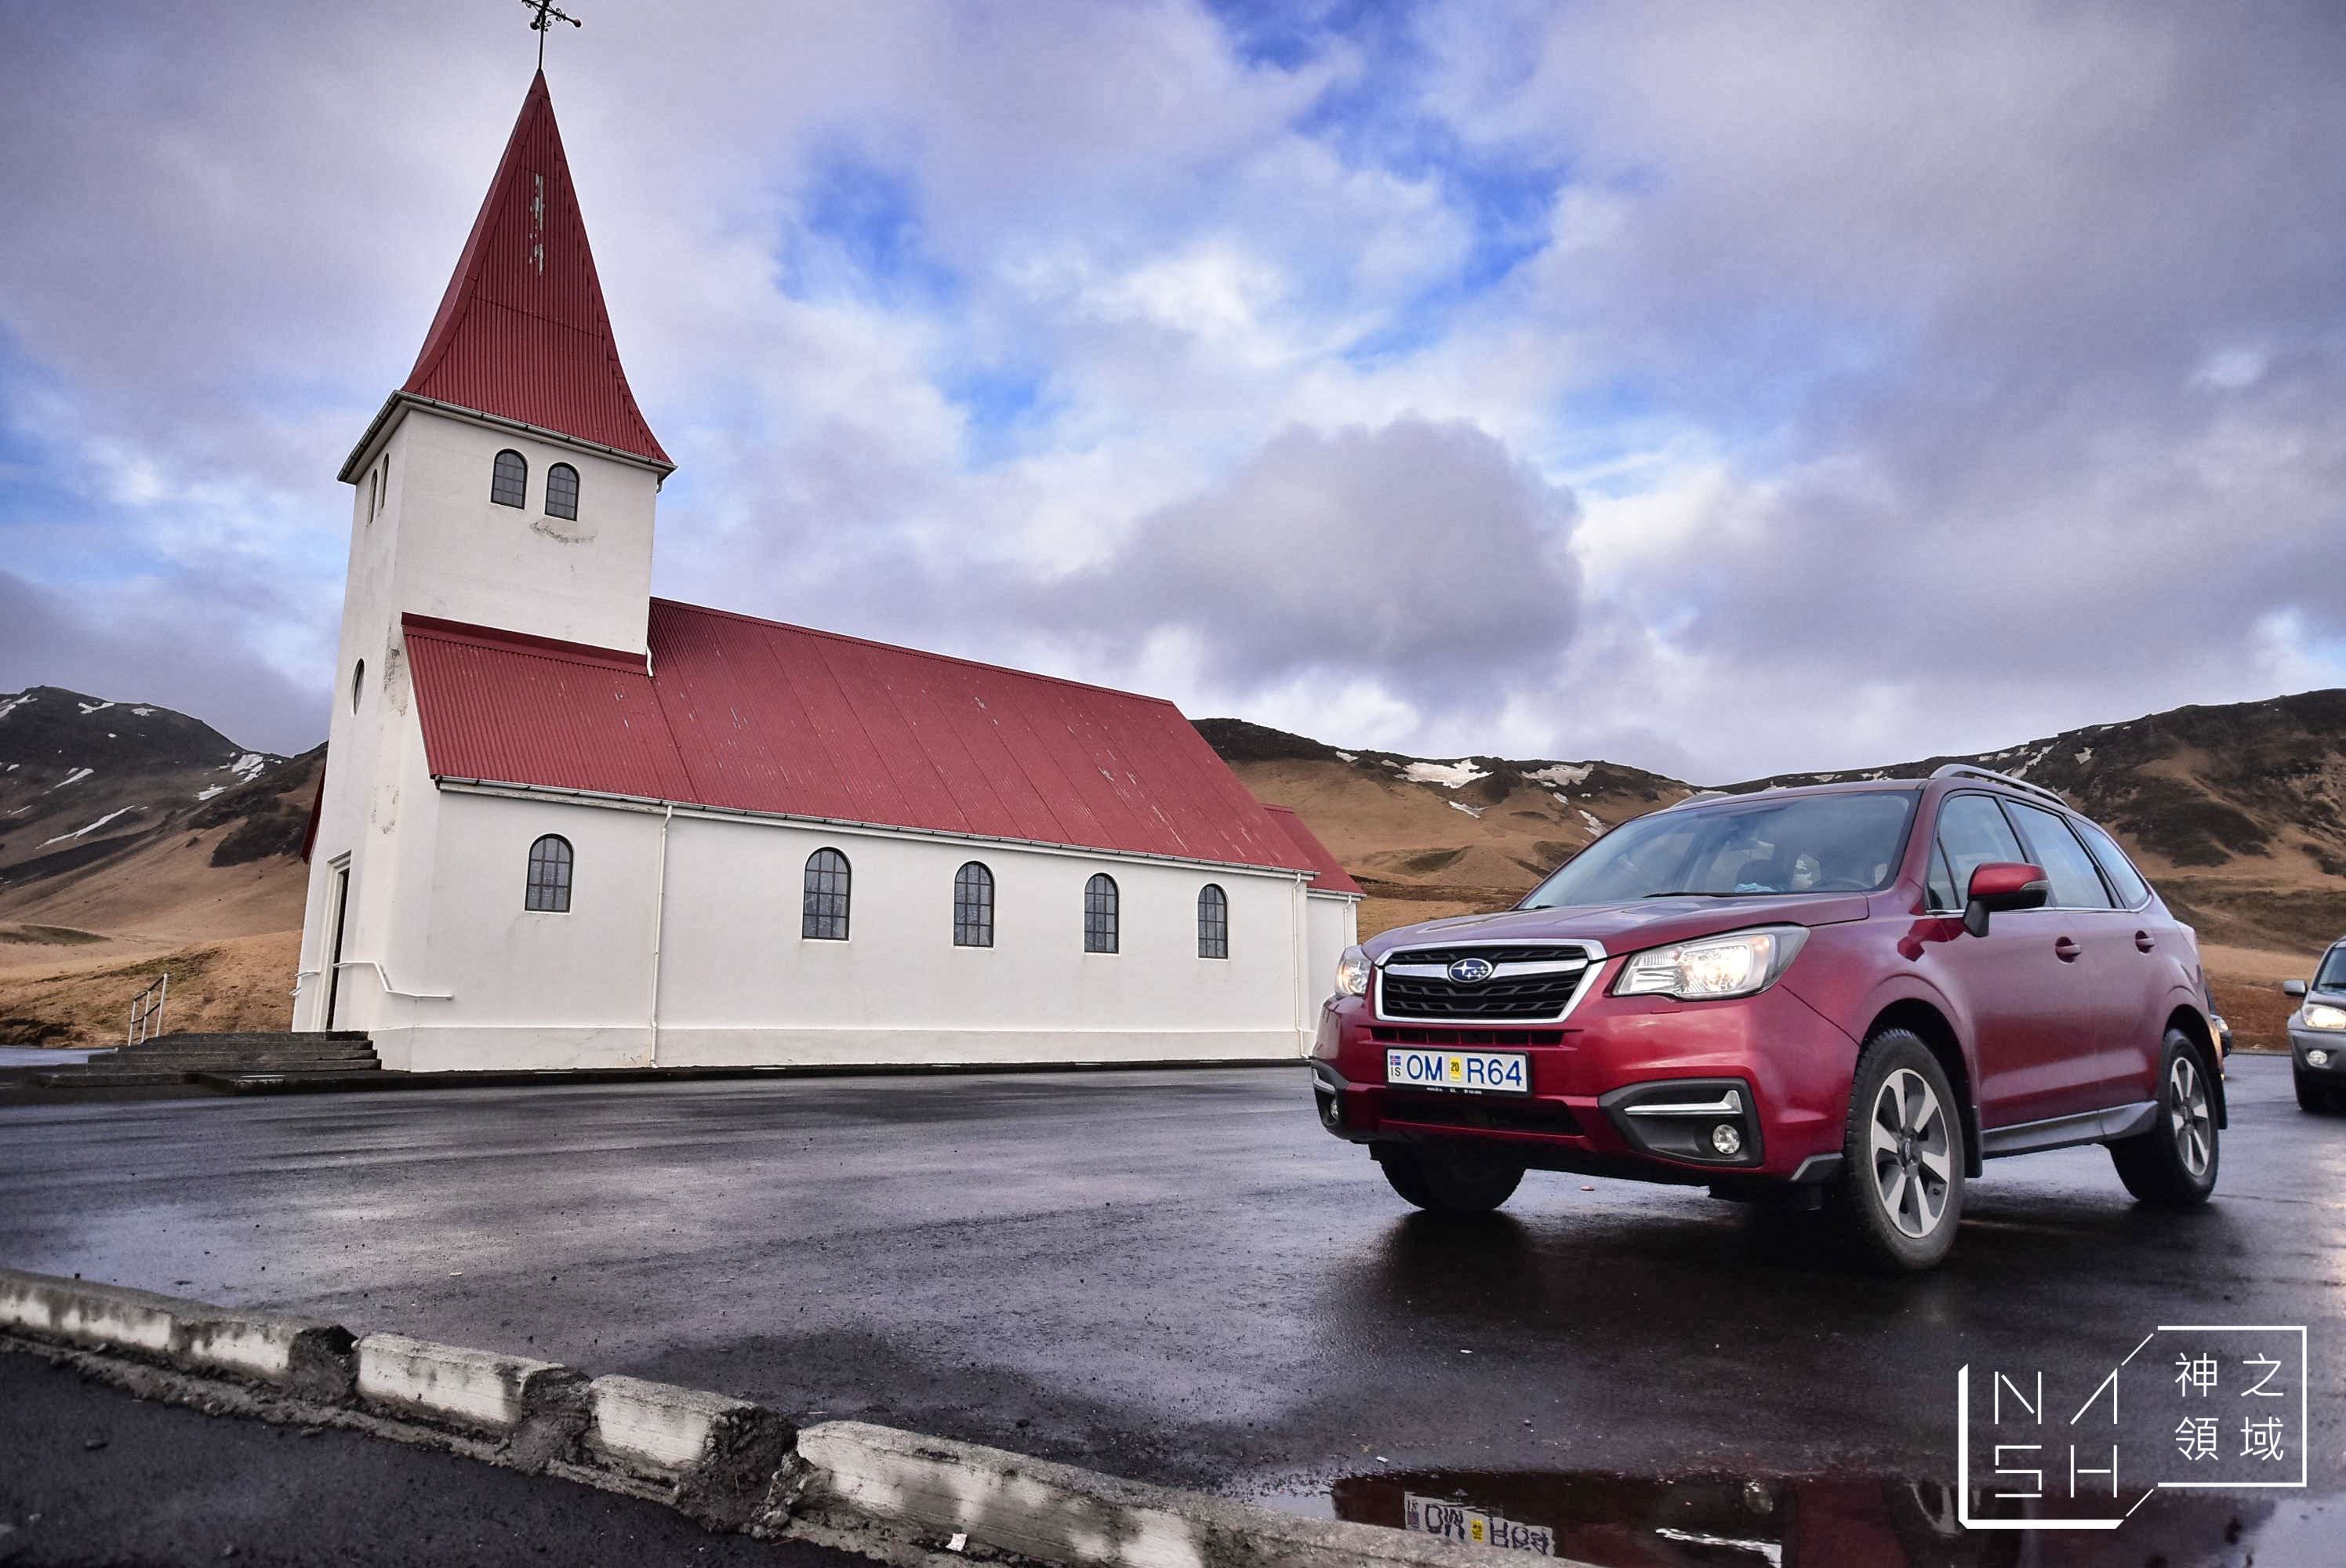 Vik i Myrdal Church,冰島自由行環島景點推薦,冰島自助景點推薦,維克教堂,vik church @Nash，神之領域